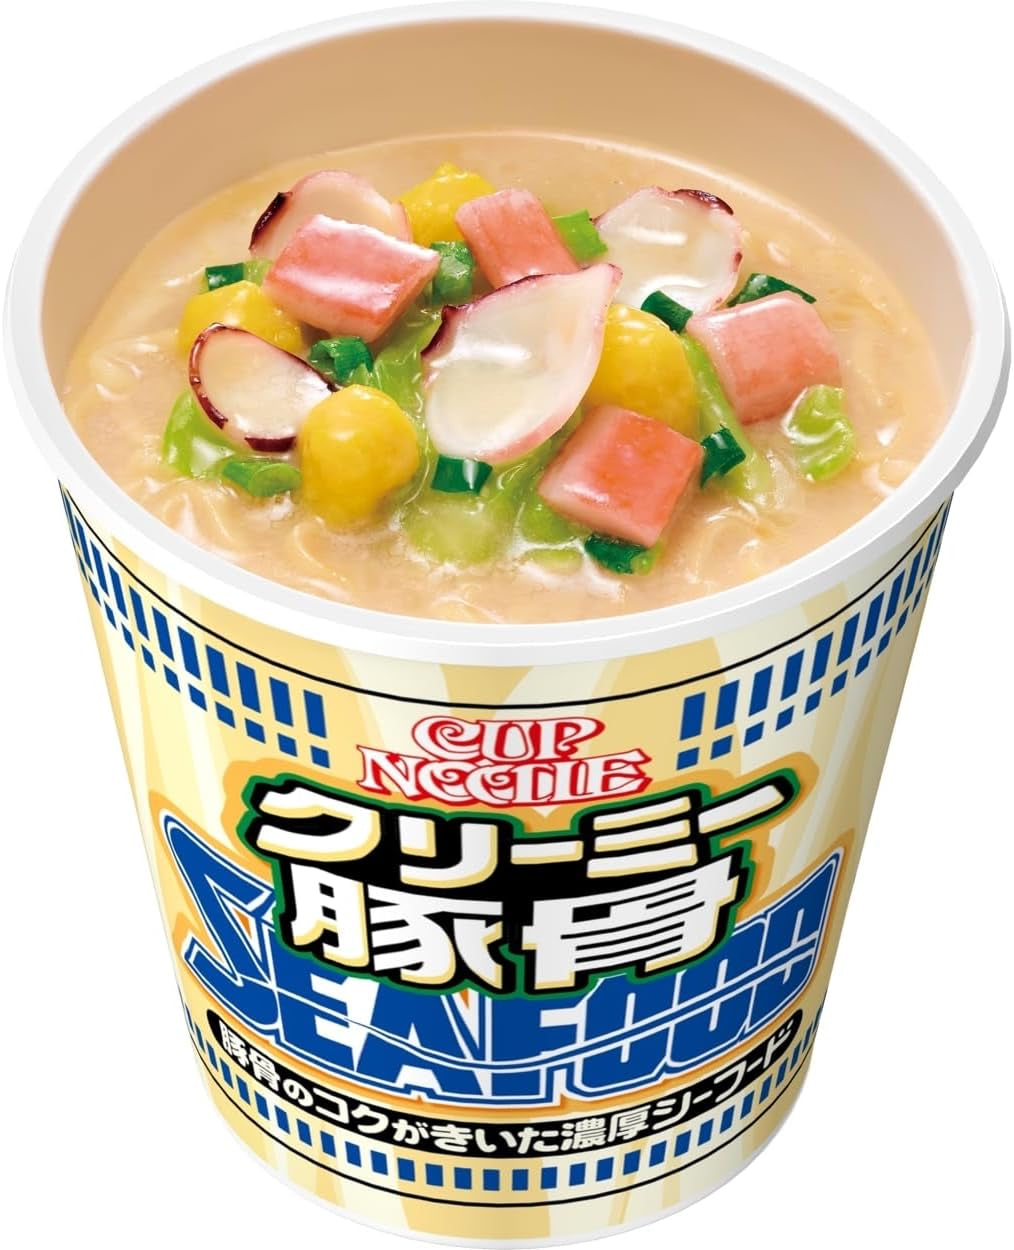 NISSIN CUP NOODLE Ramen Tonkotsu Seafood Pork Instant Soup Food Japanese 101g